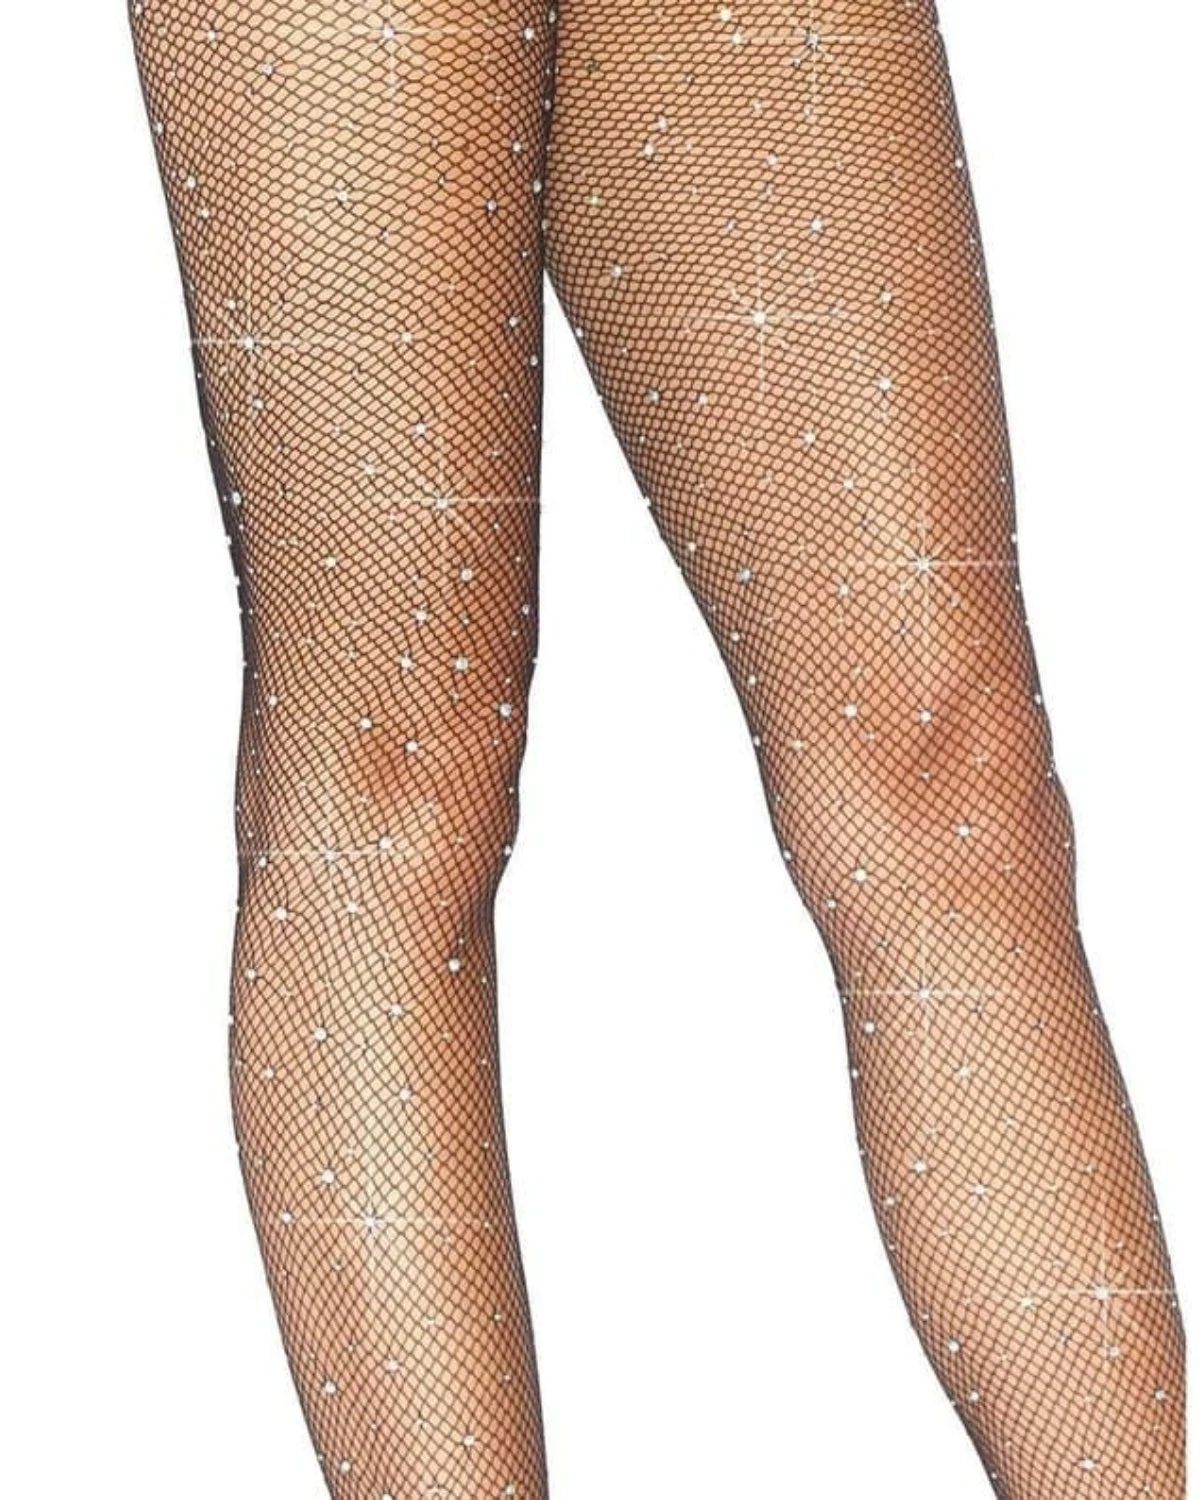 Iridescent Fishnet tights